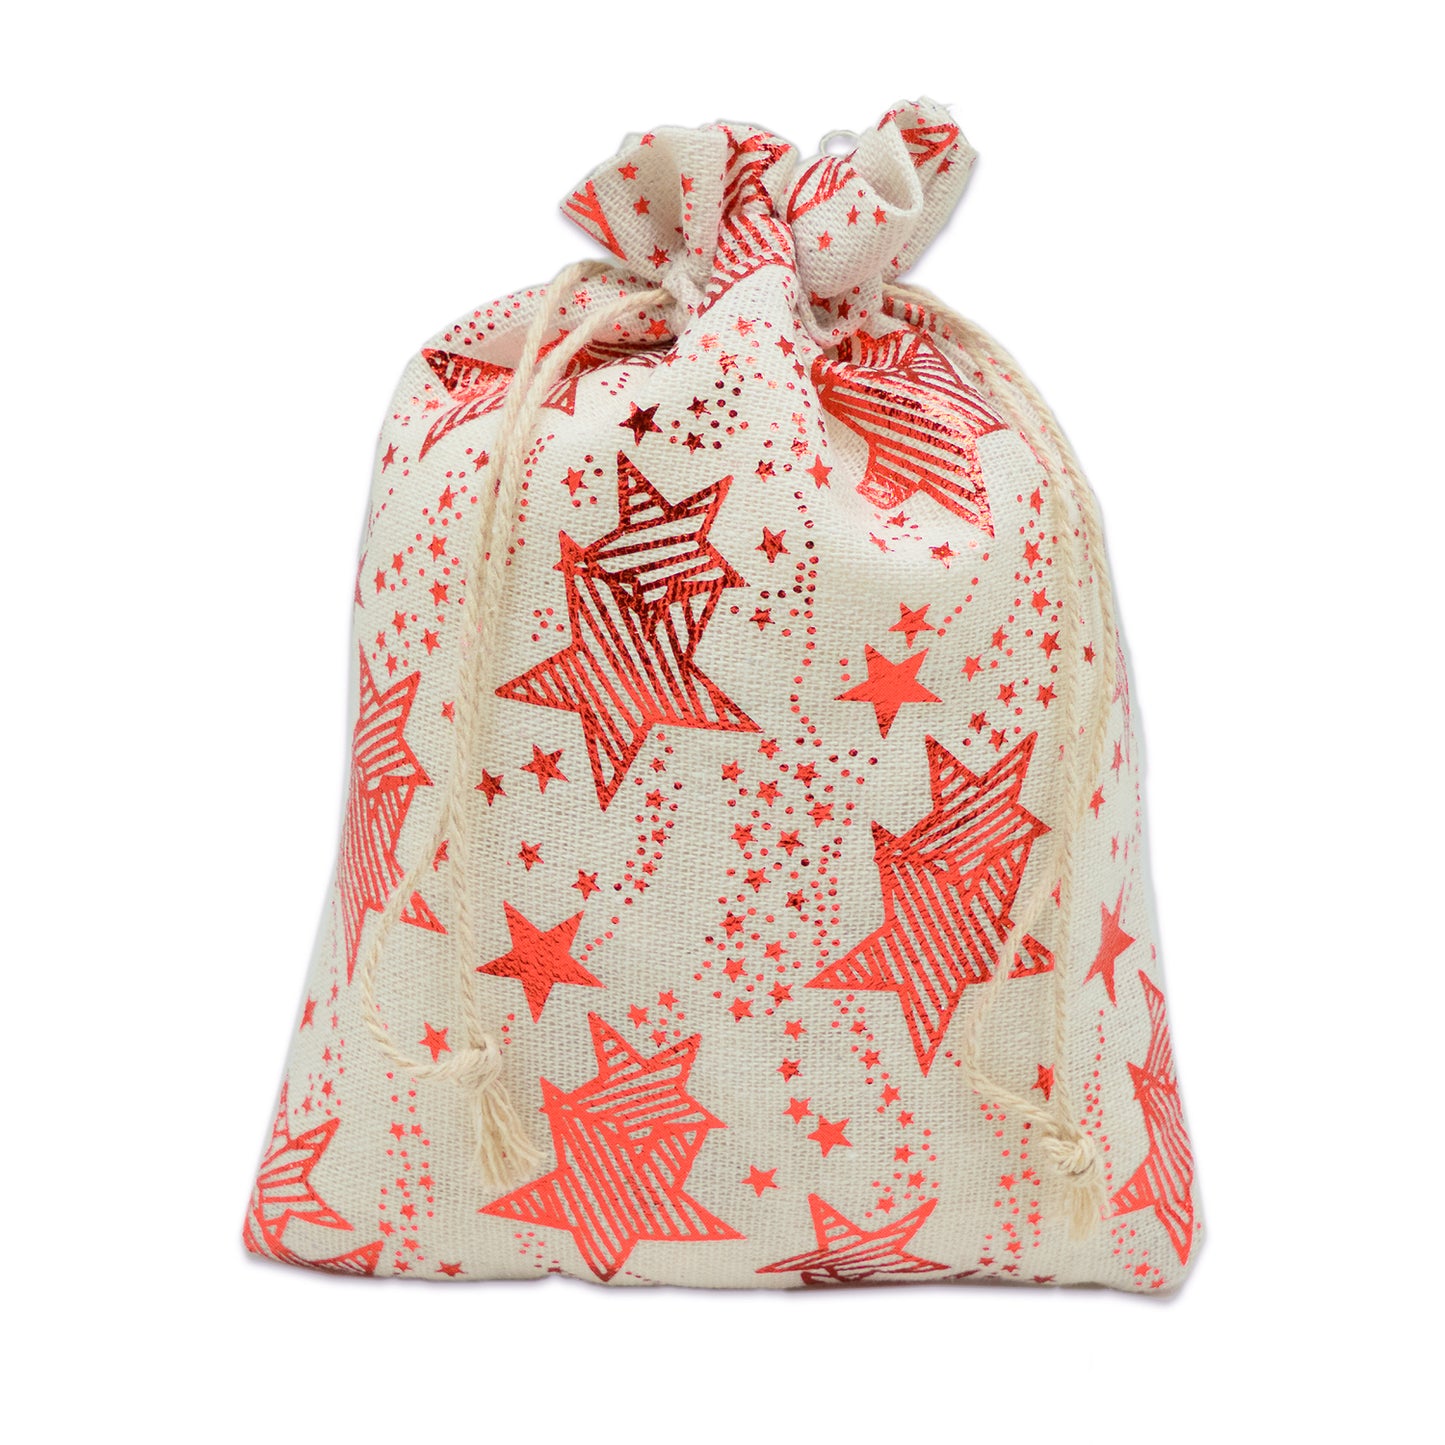 6" x 8" Cotton Muslin Red Star Drawstring Gift Bags